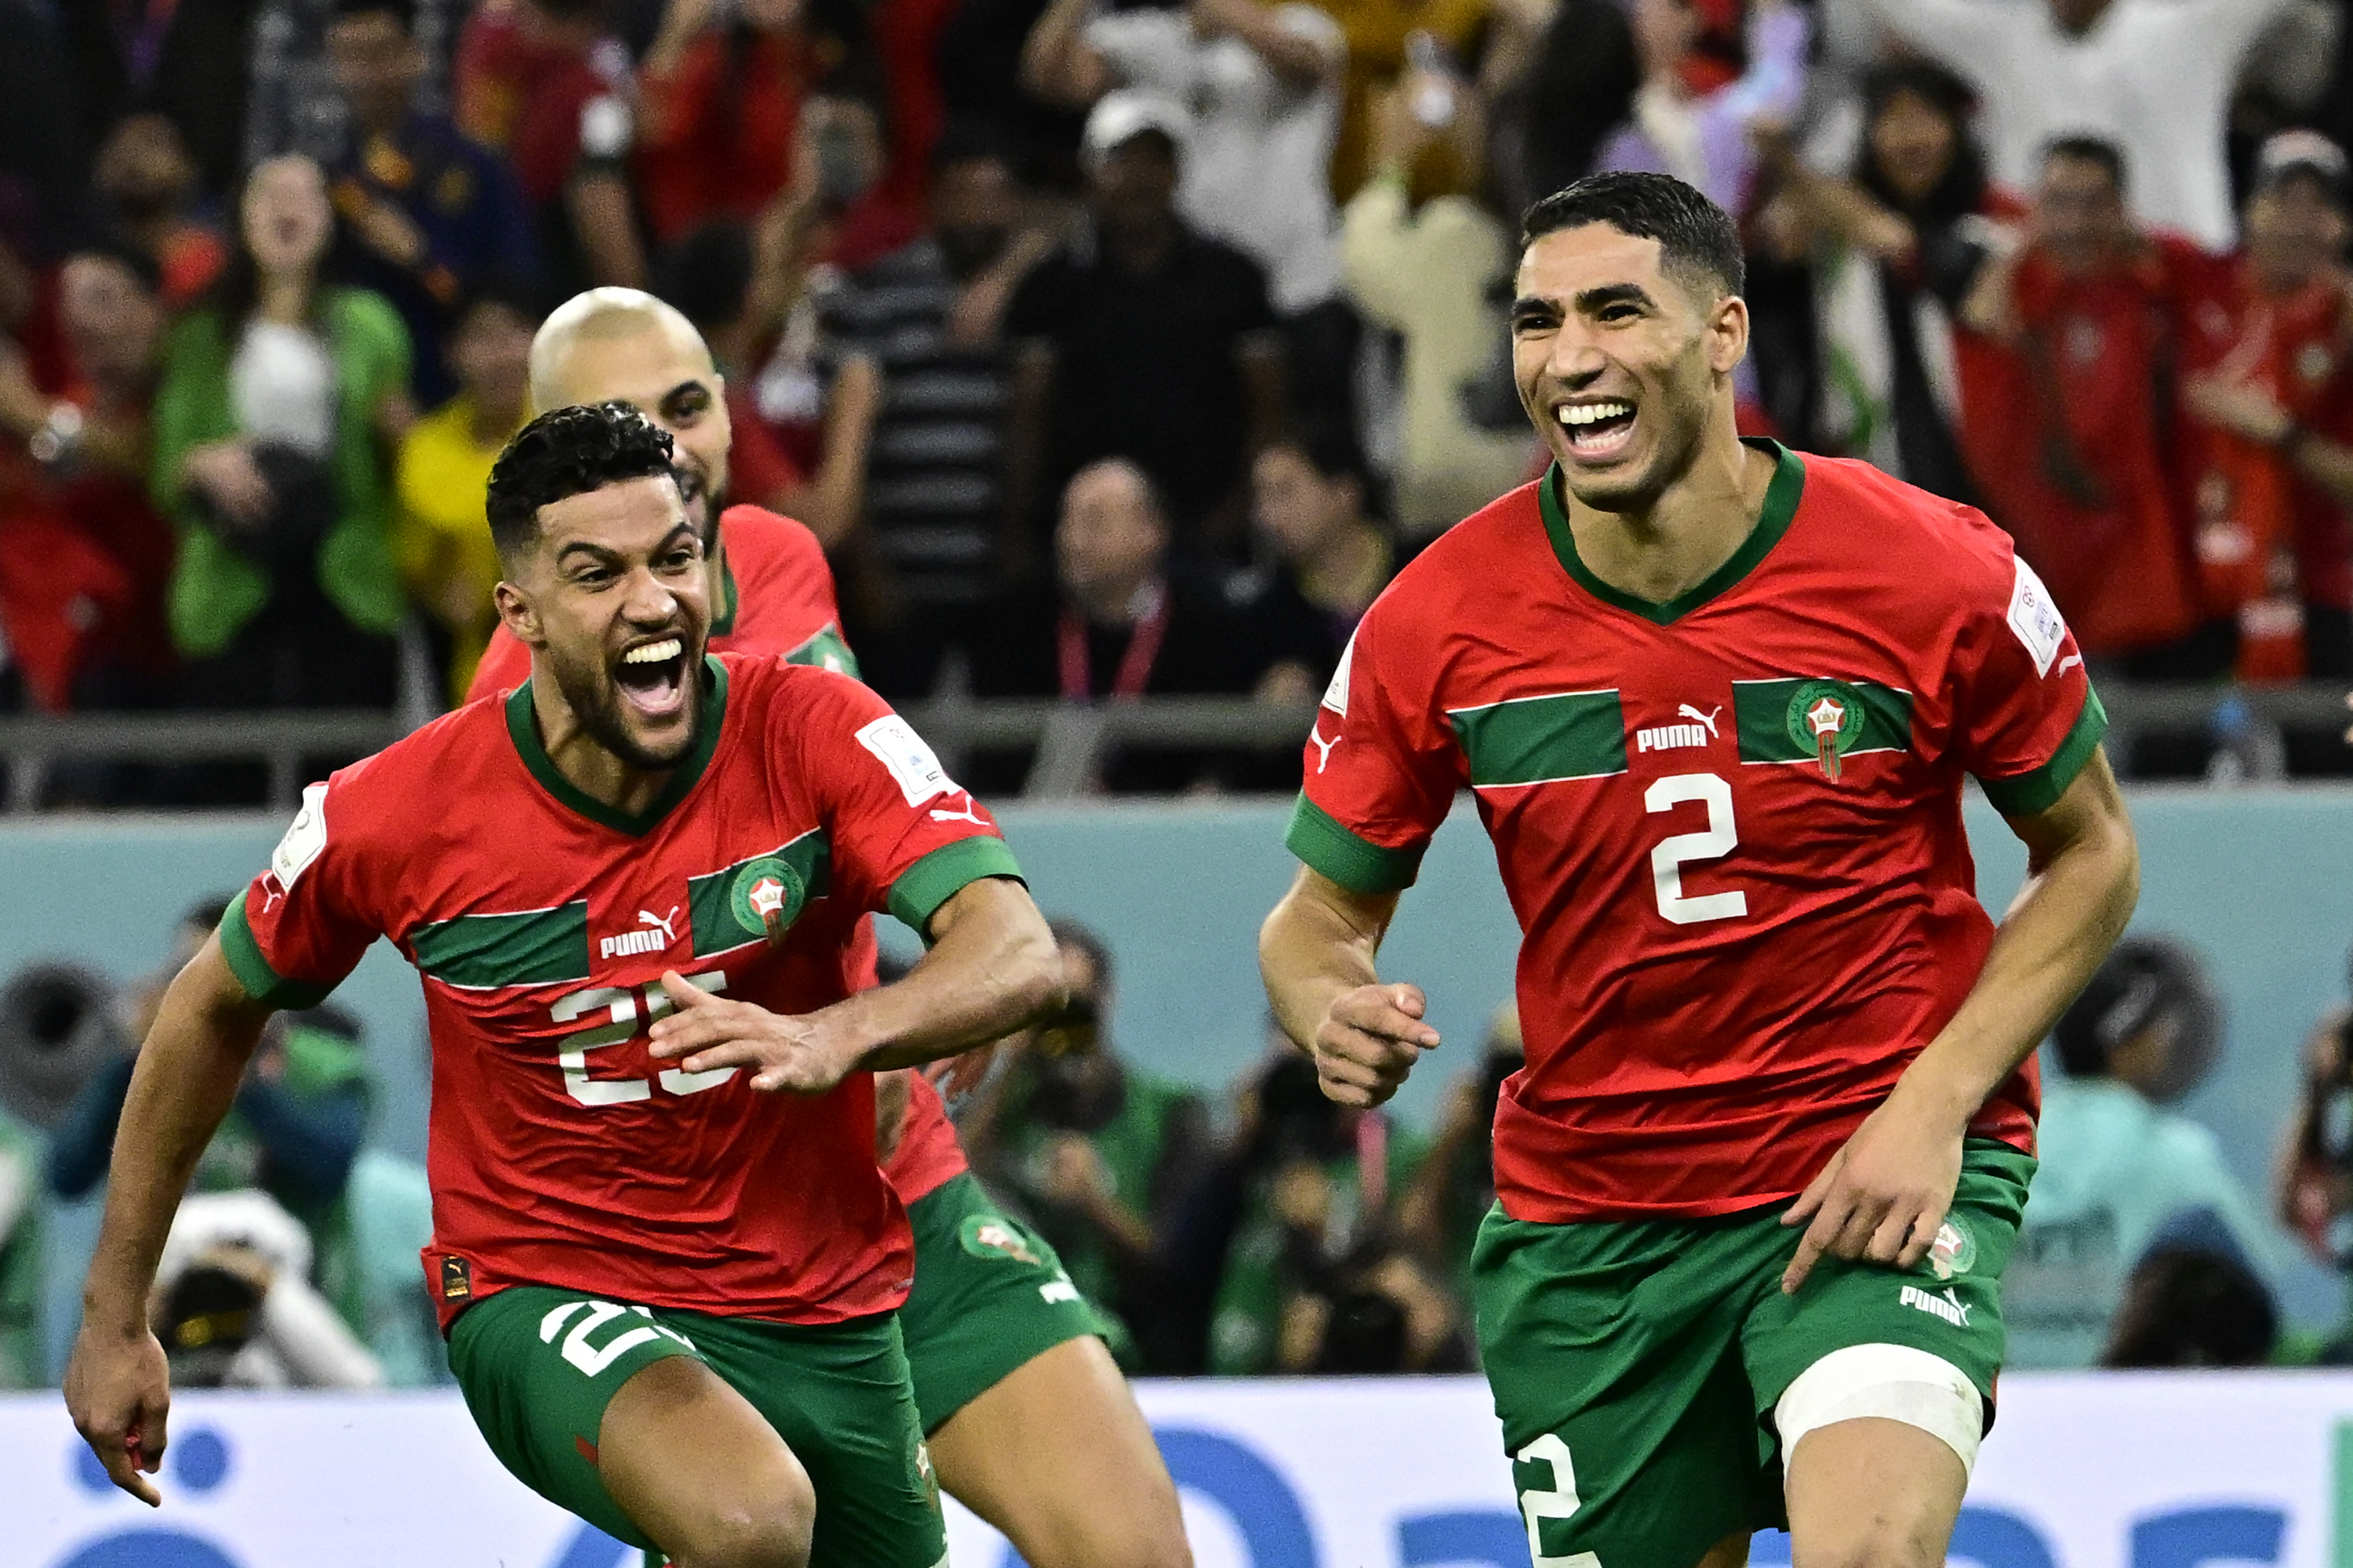 Marrocos 0 - 0 Espanha (3-0, G.P) (Relato)  Oitavos de Final do Mundial  2022 - A Primeira Rádio Desporto - Golo FM